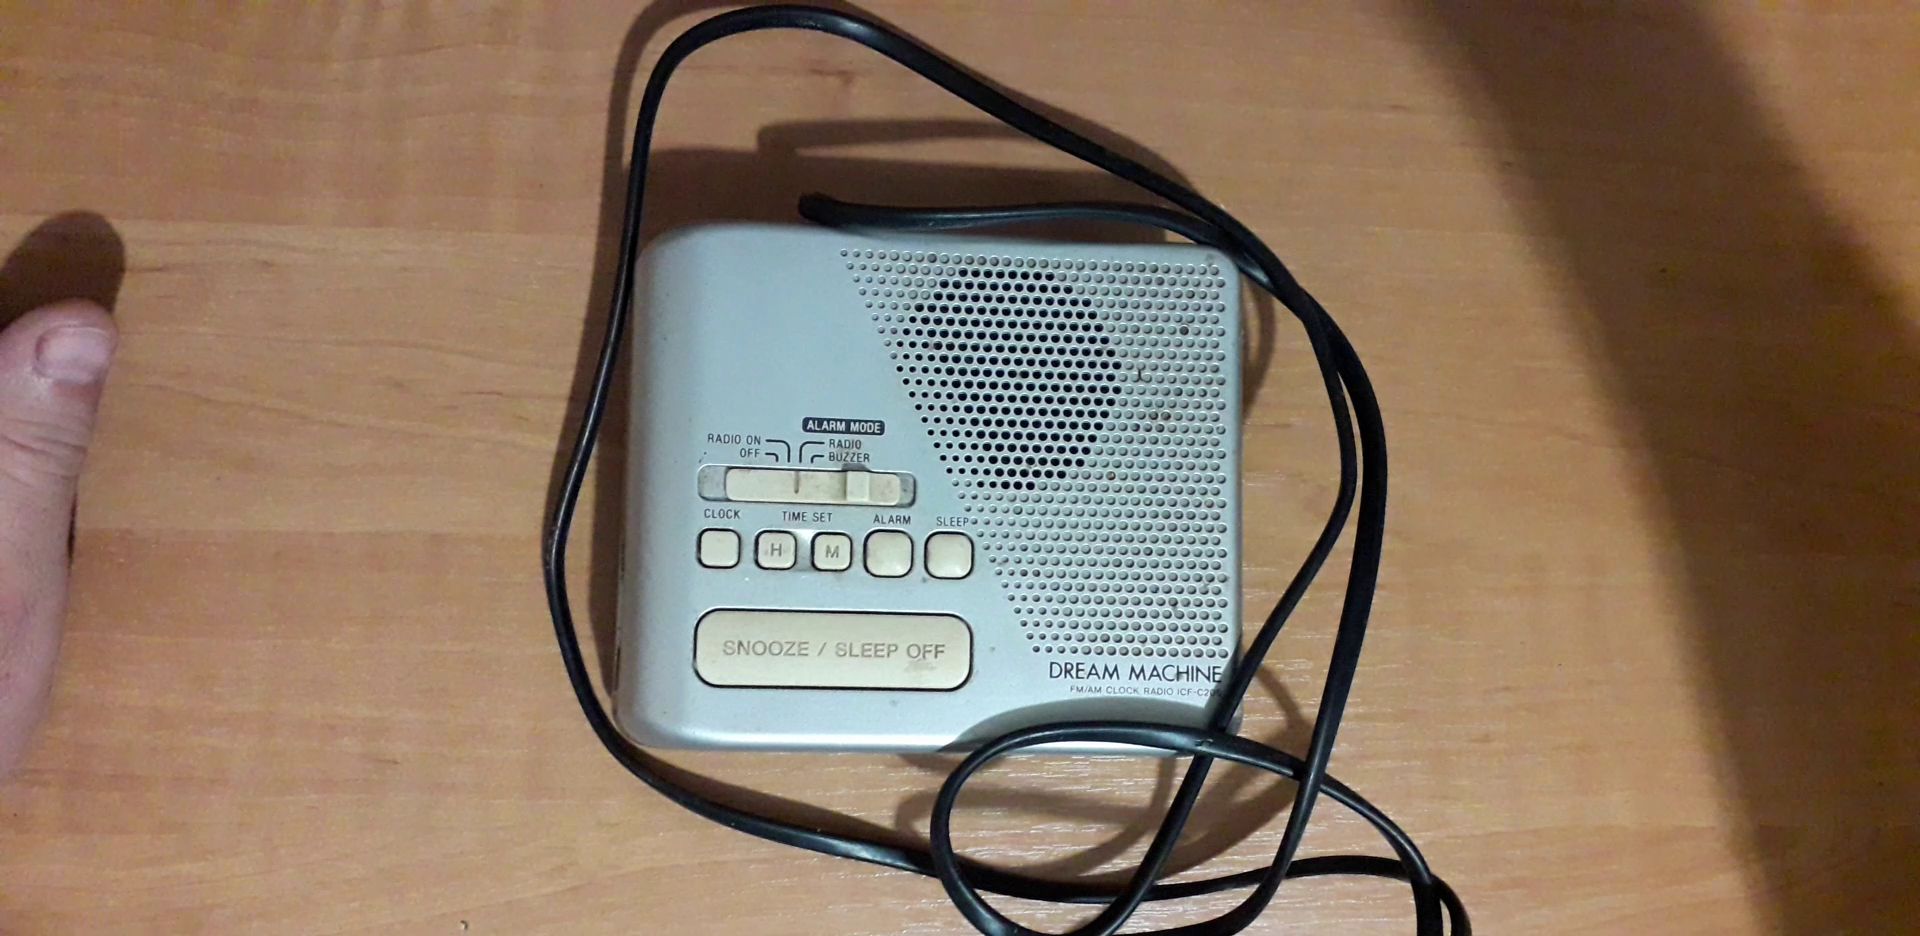 Радиочасы с будильником Sony Dream Machine (разбор)